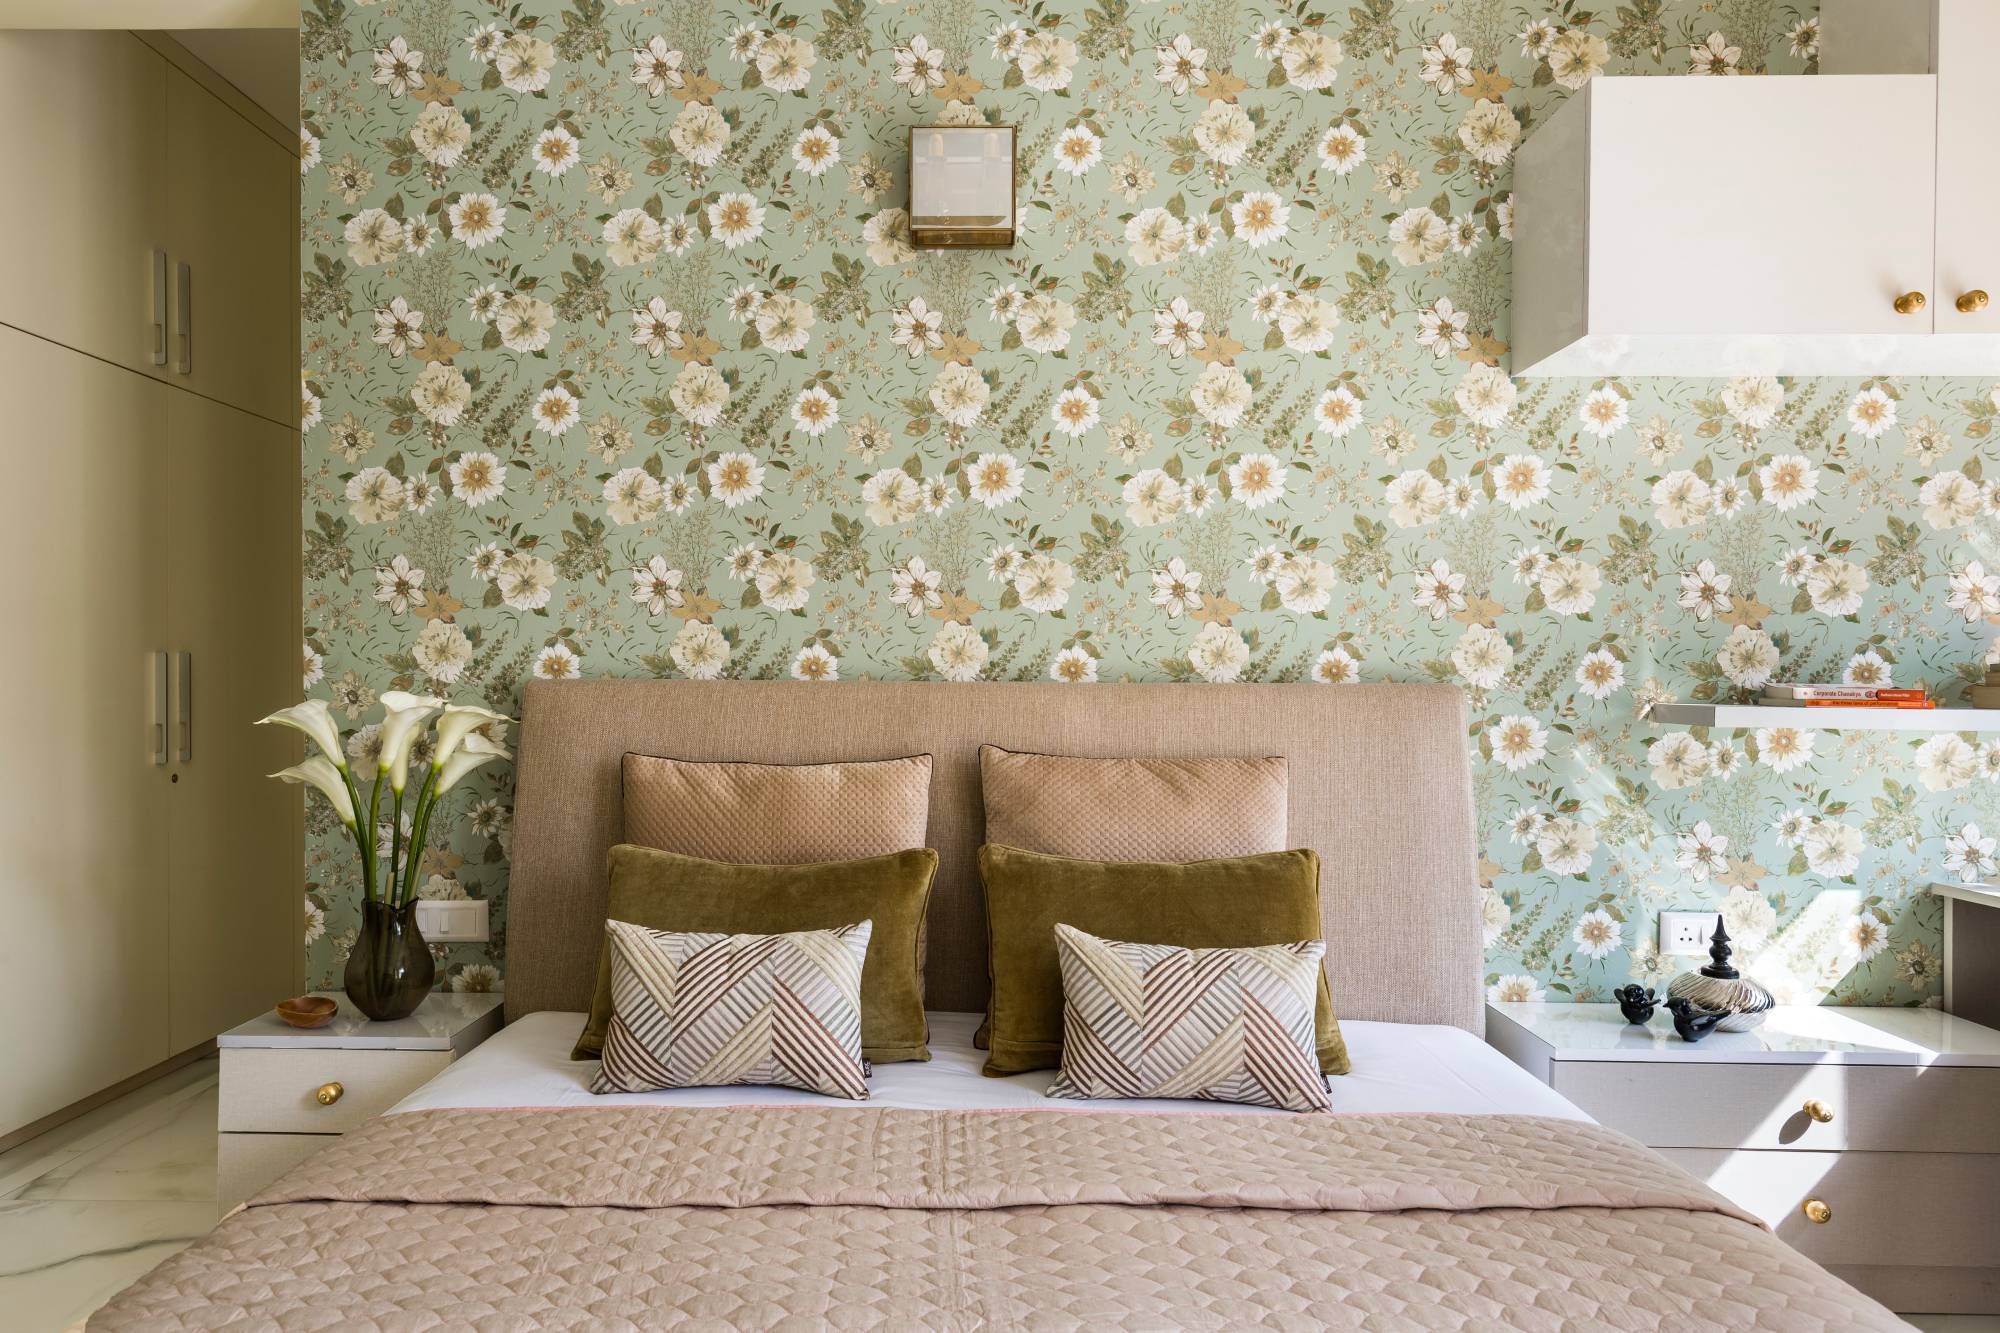 Modern Guest Room Design With Pastel Floral Wallpaper